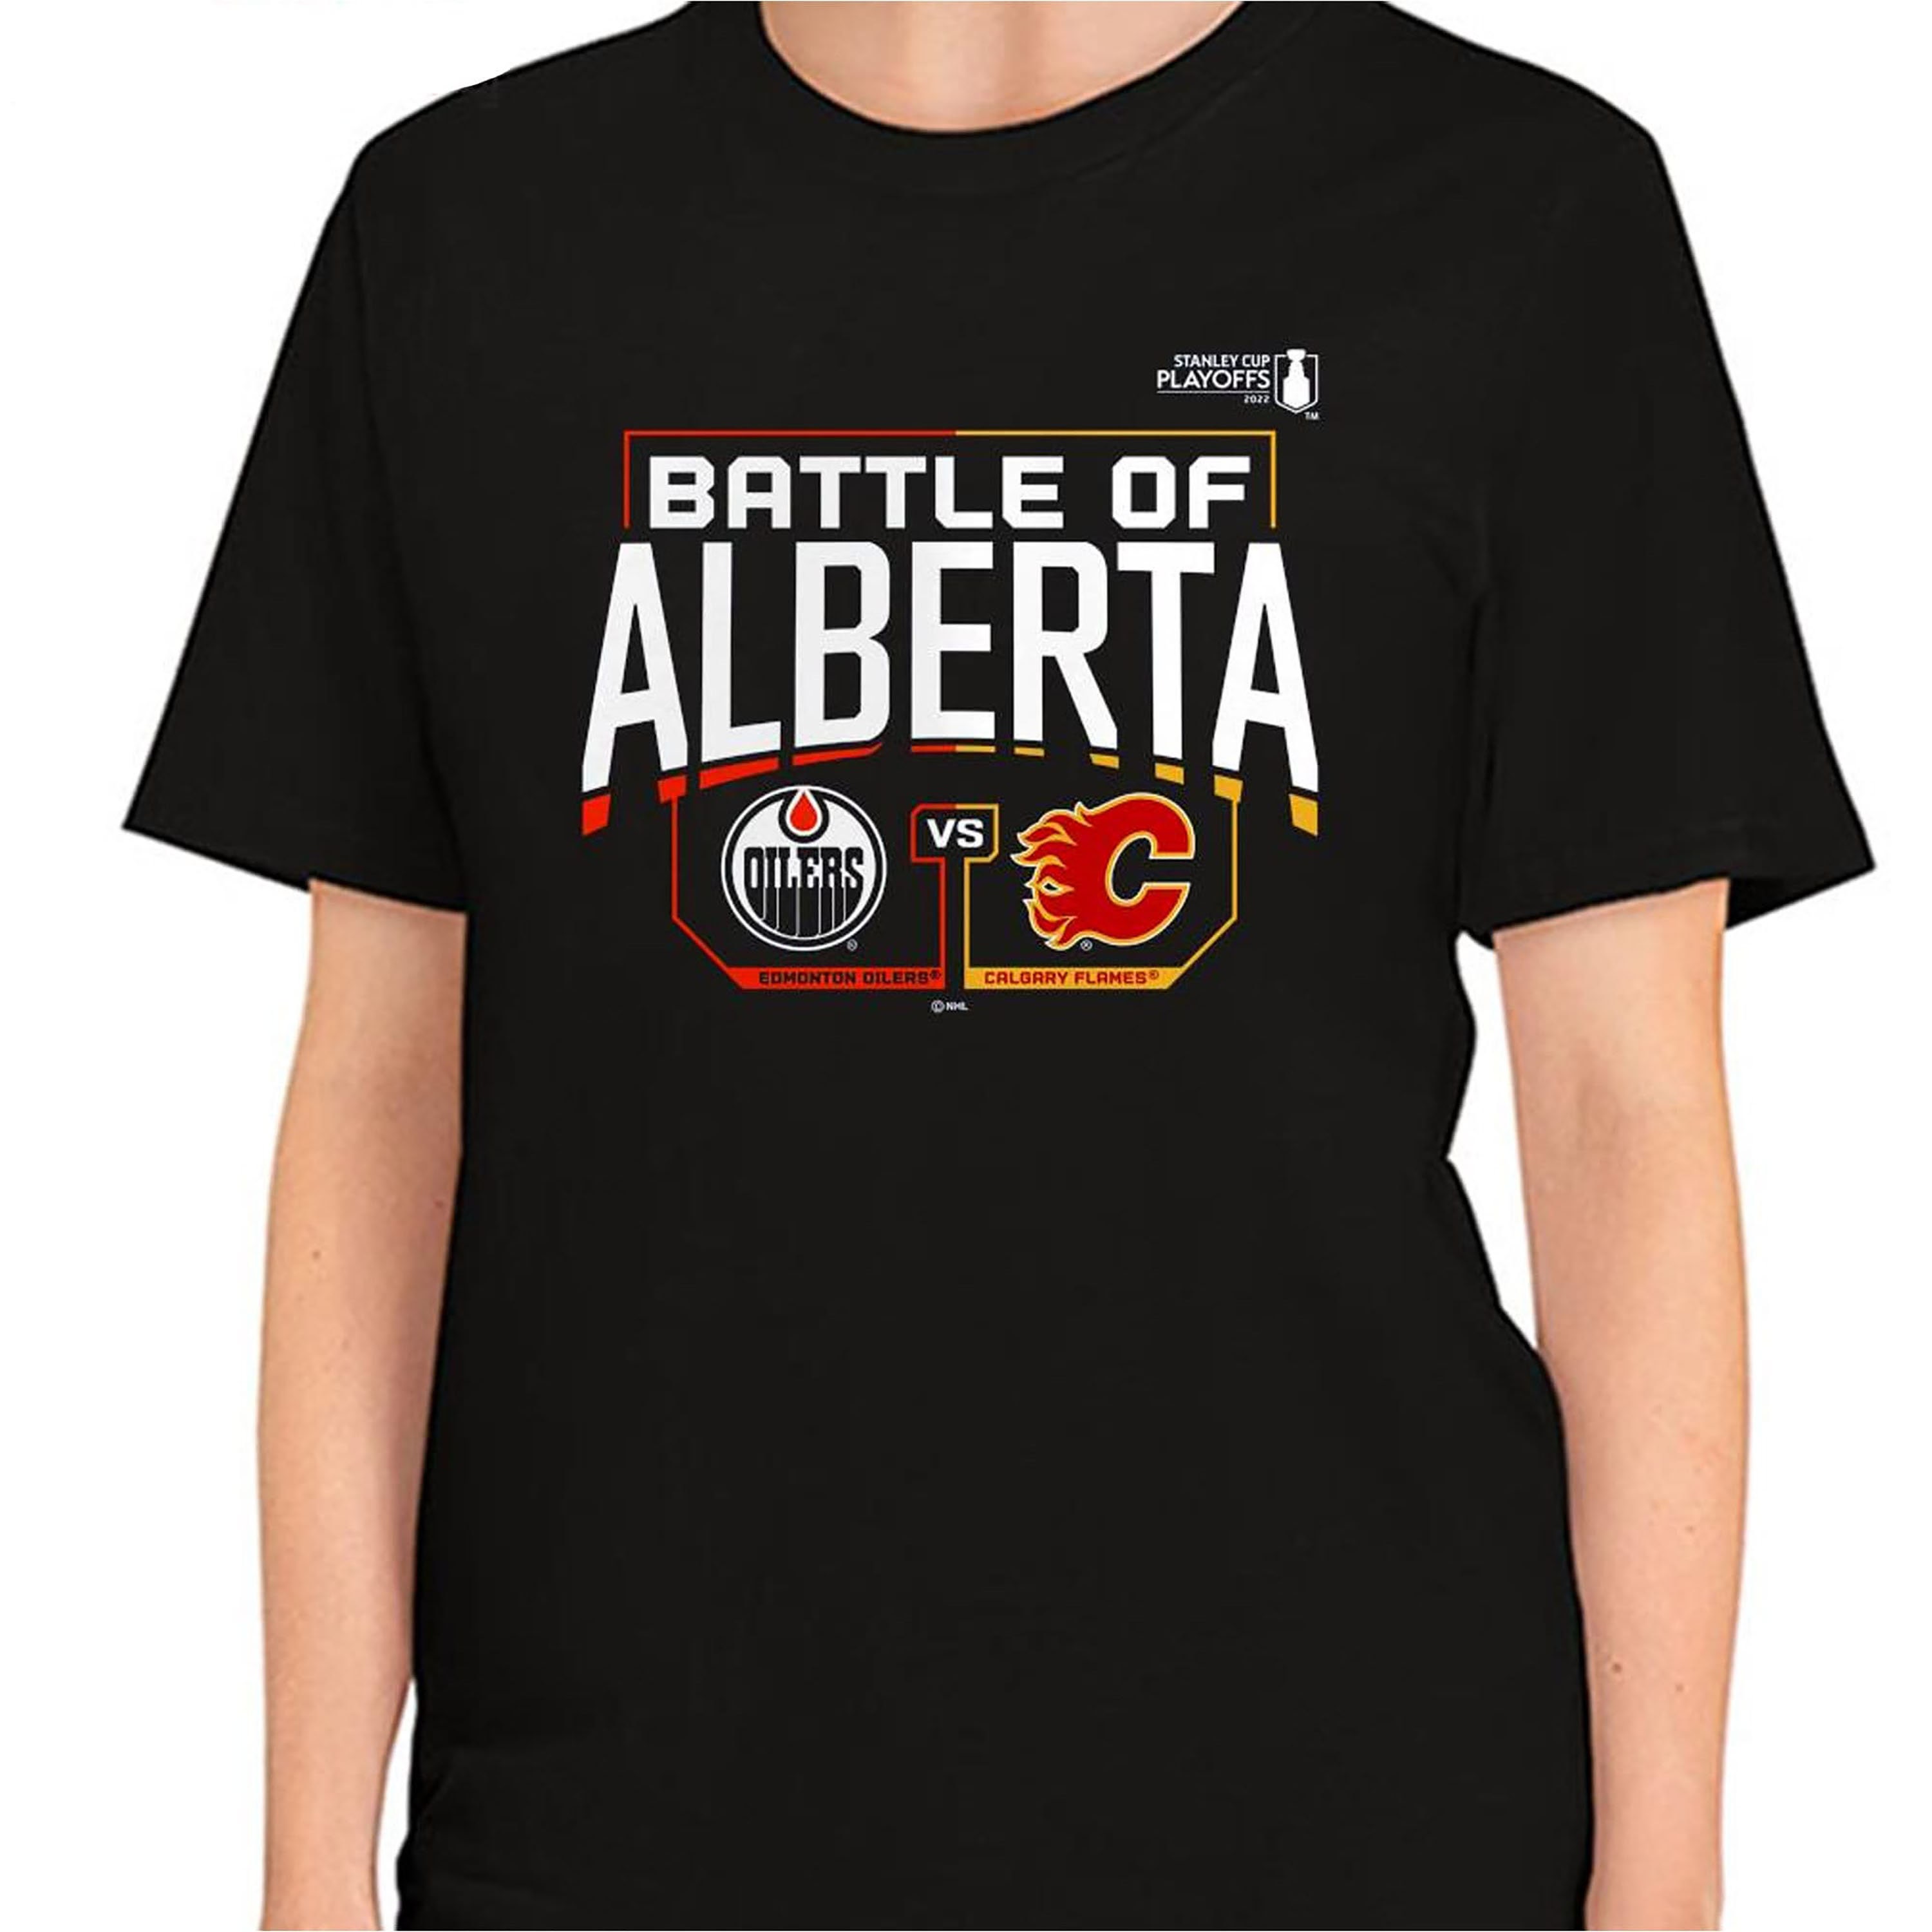 Battle Of Alberta Flames Vs Oilers Unisex T-Shirt